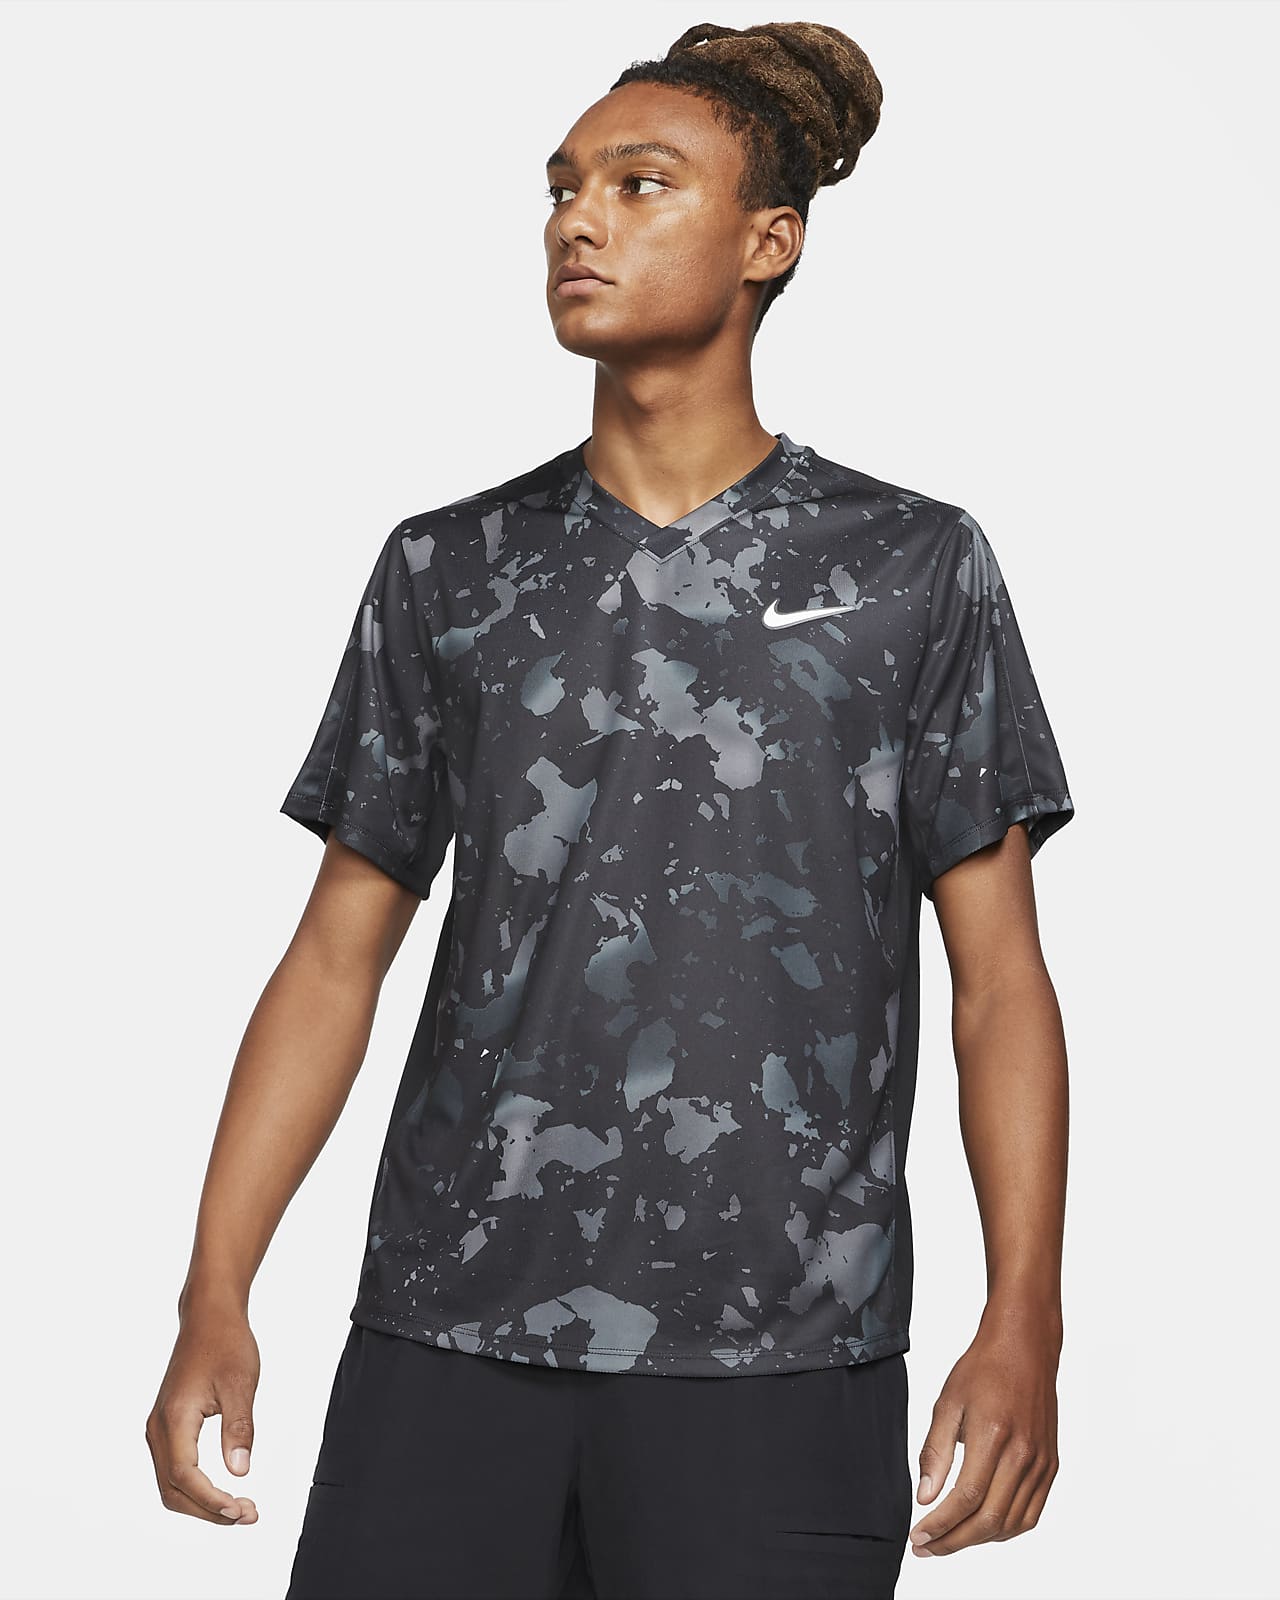 NikeCourt Dri-FIT Victory Men's Printed Tennis Top. Nike MA